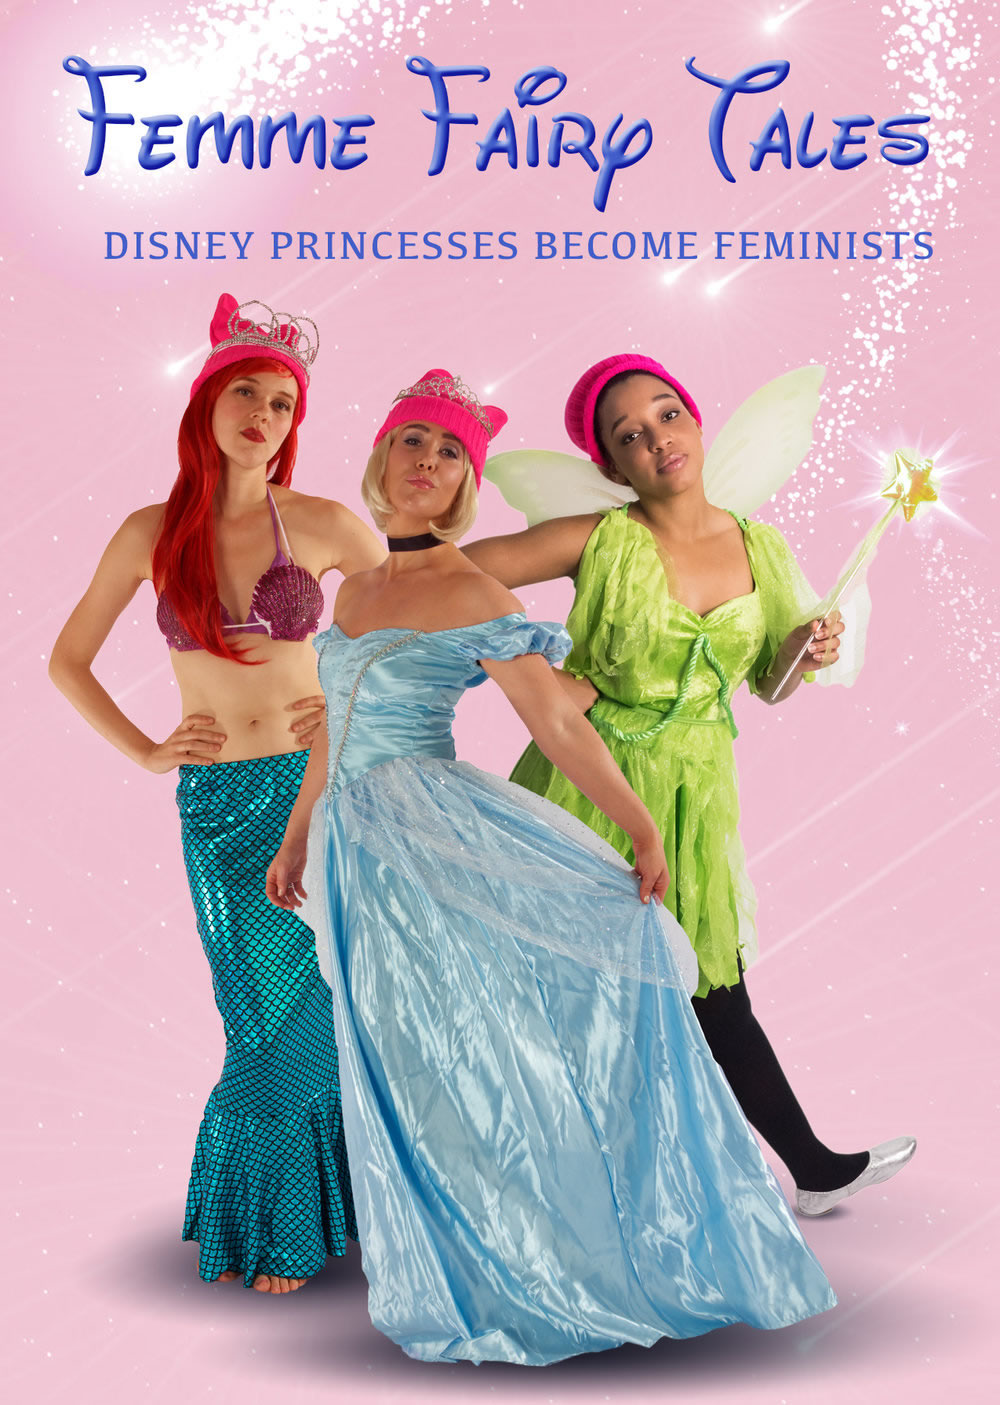 Laura Lane, Ellen Haun, and Amber Williams: "Femme Fairy Tales"